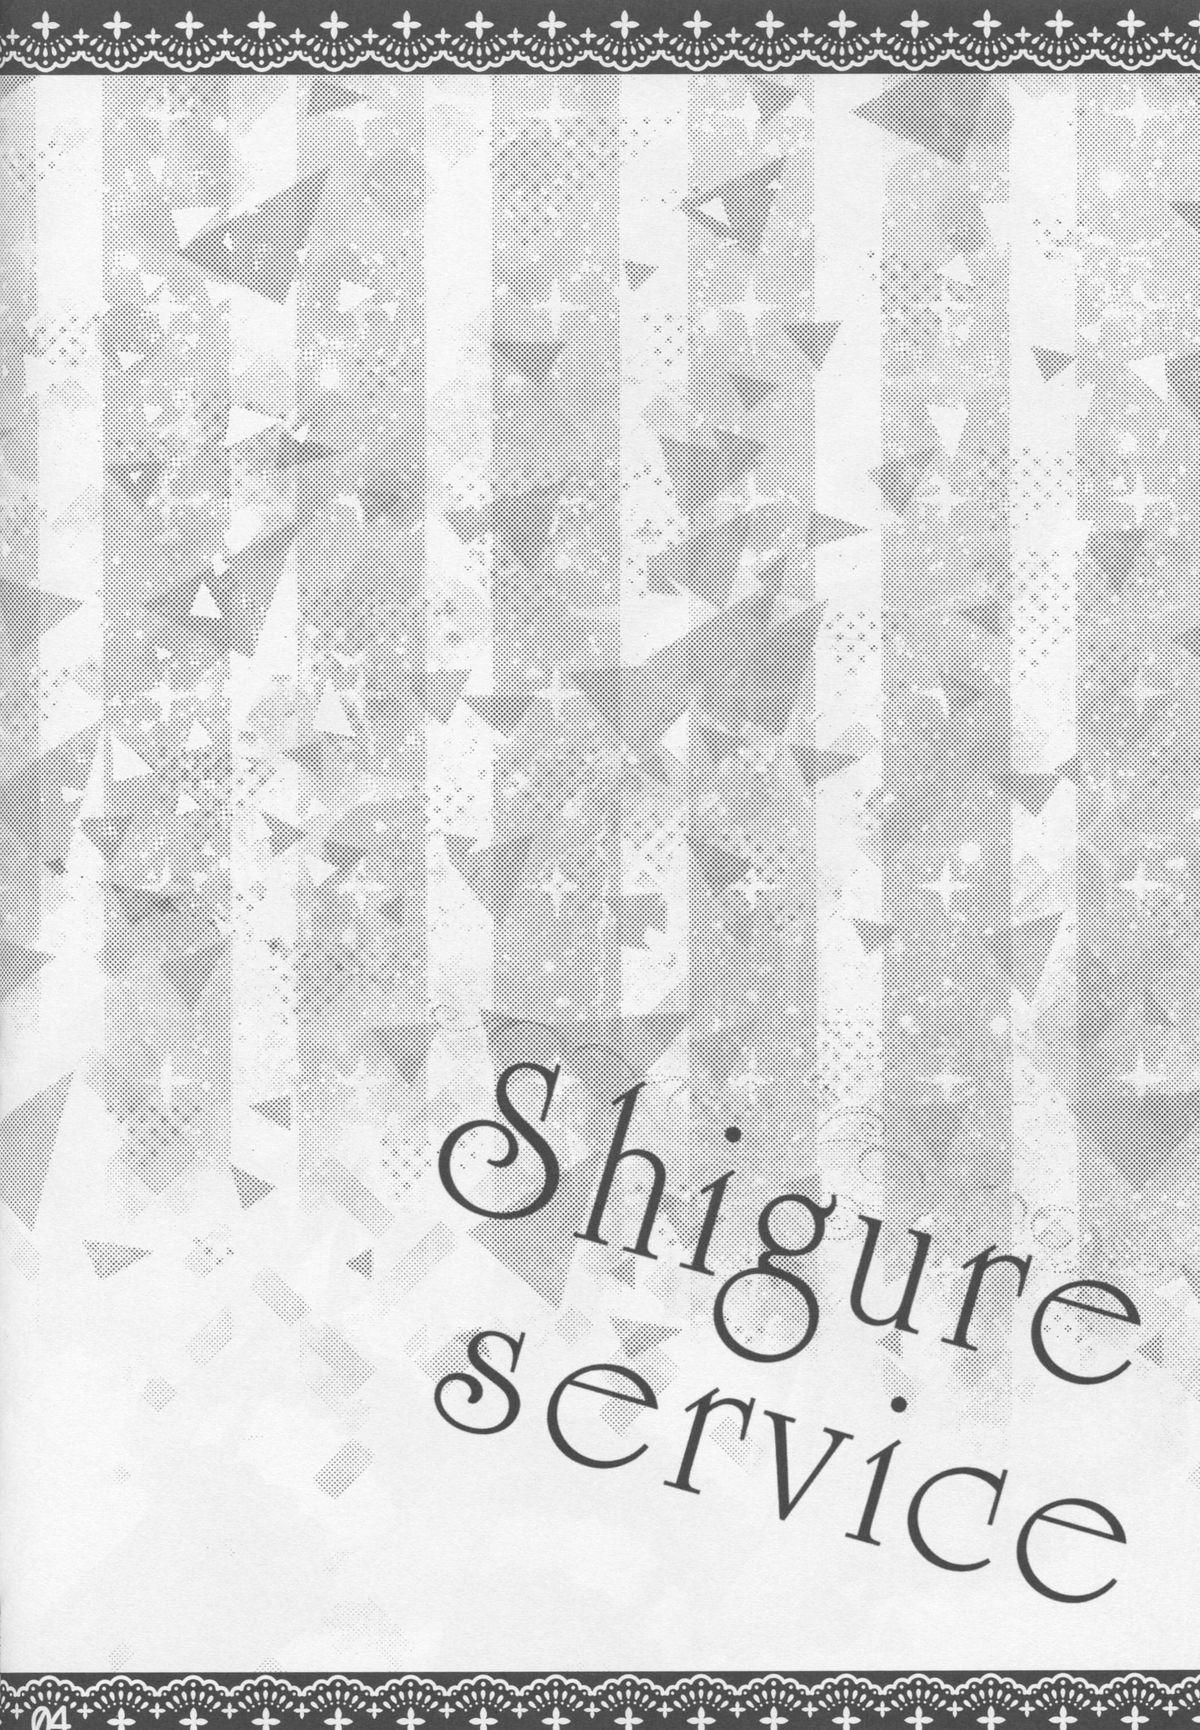 Shigure Service 2